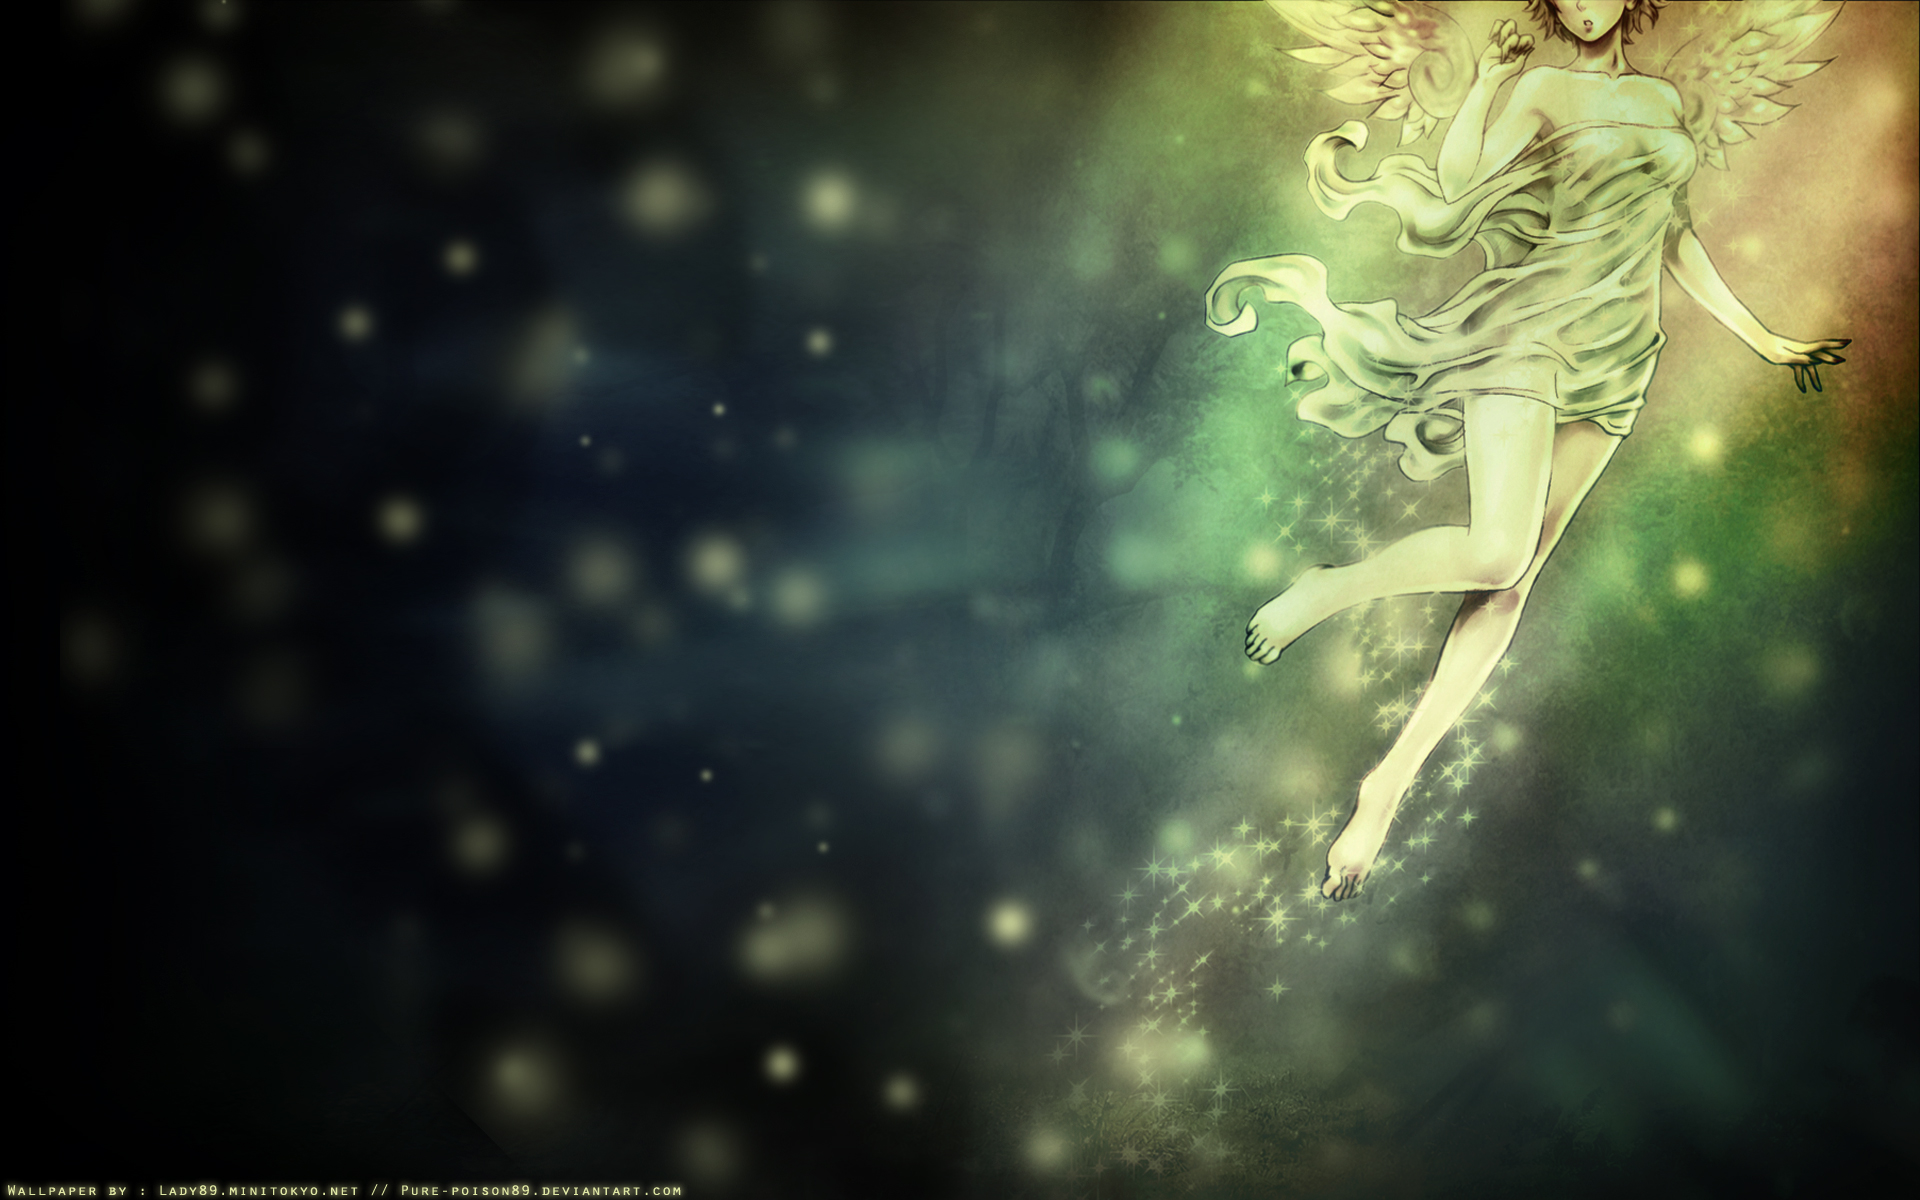 wings, fairies, barefoot, fantasy art, bokeh, green dress - desktop wallpaper